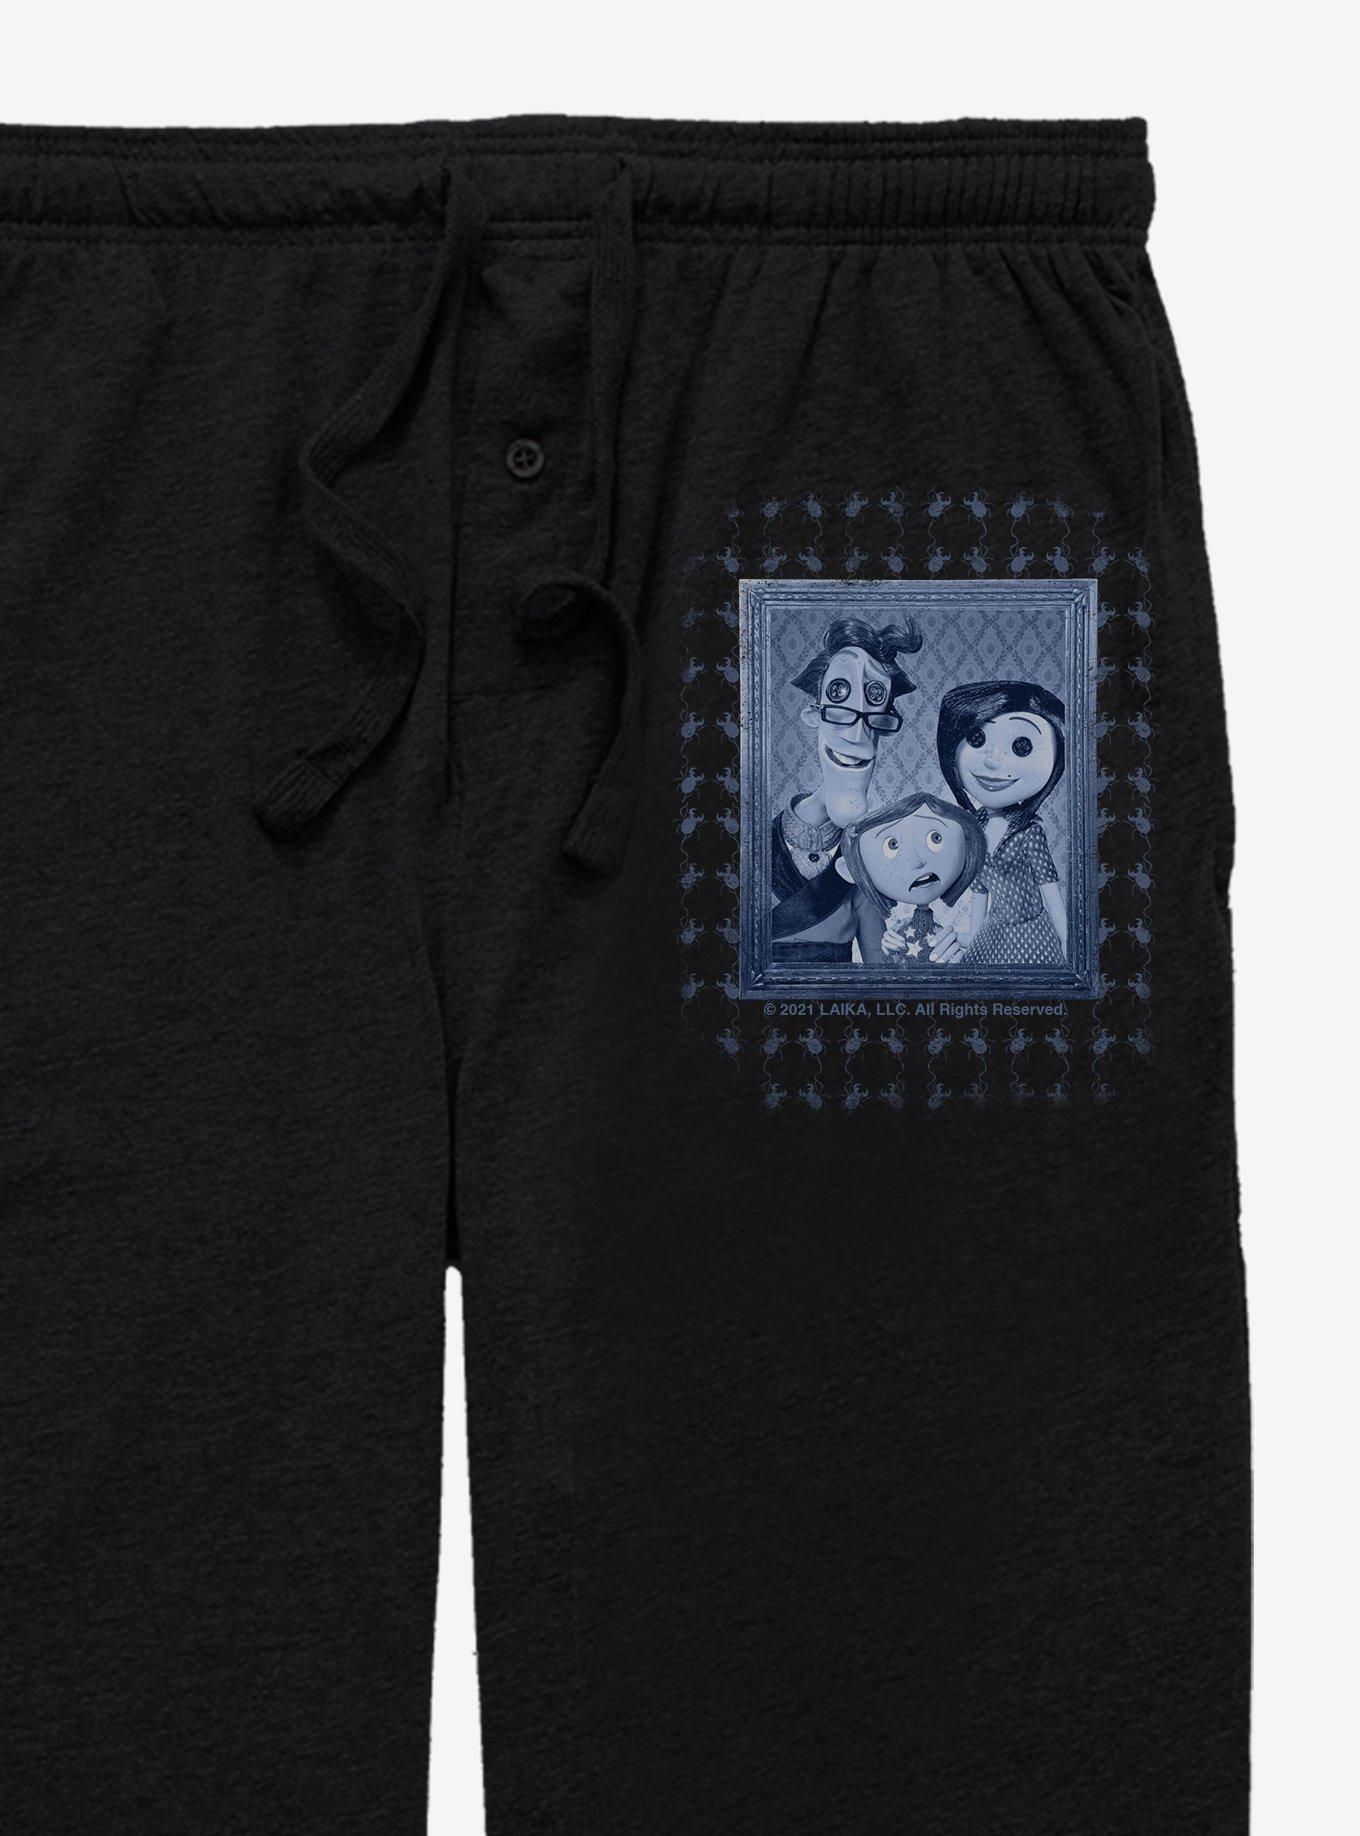 Coraline Family Portrait Pajama Pants